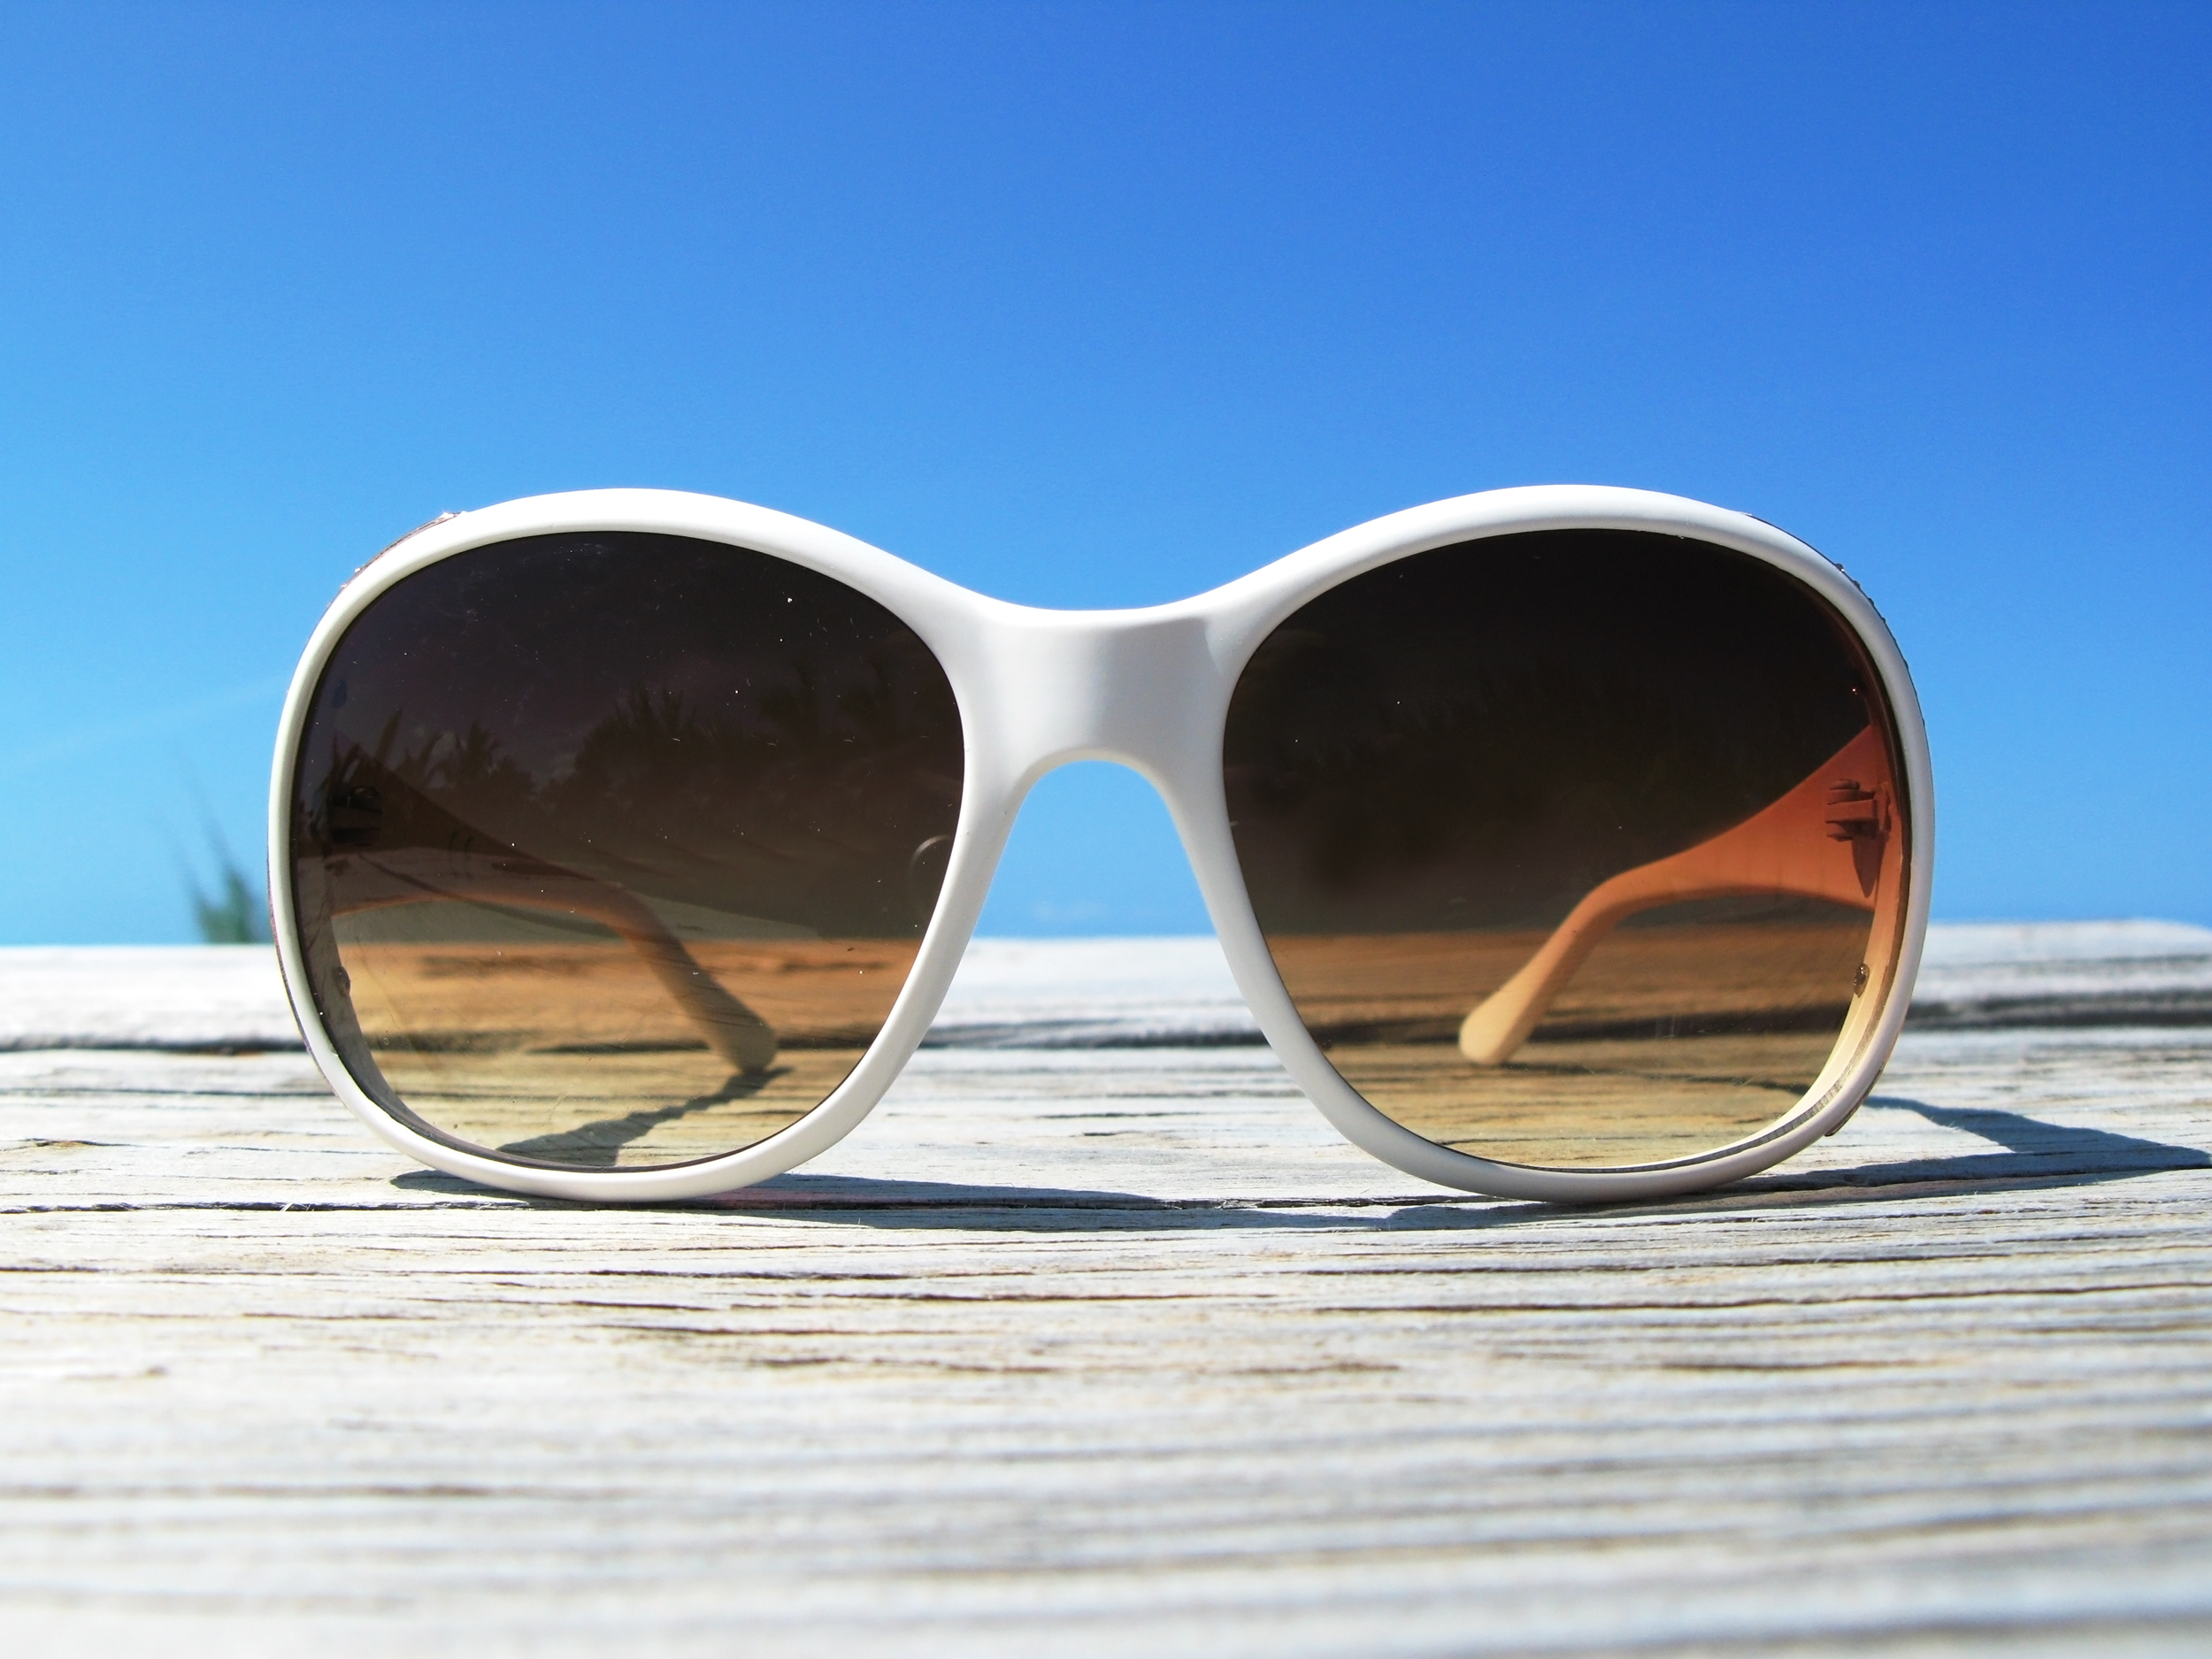 A pair of sunglasses | Source: Shutterstock